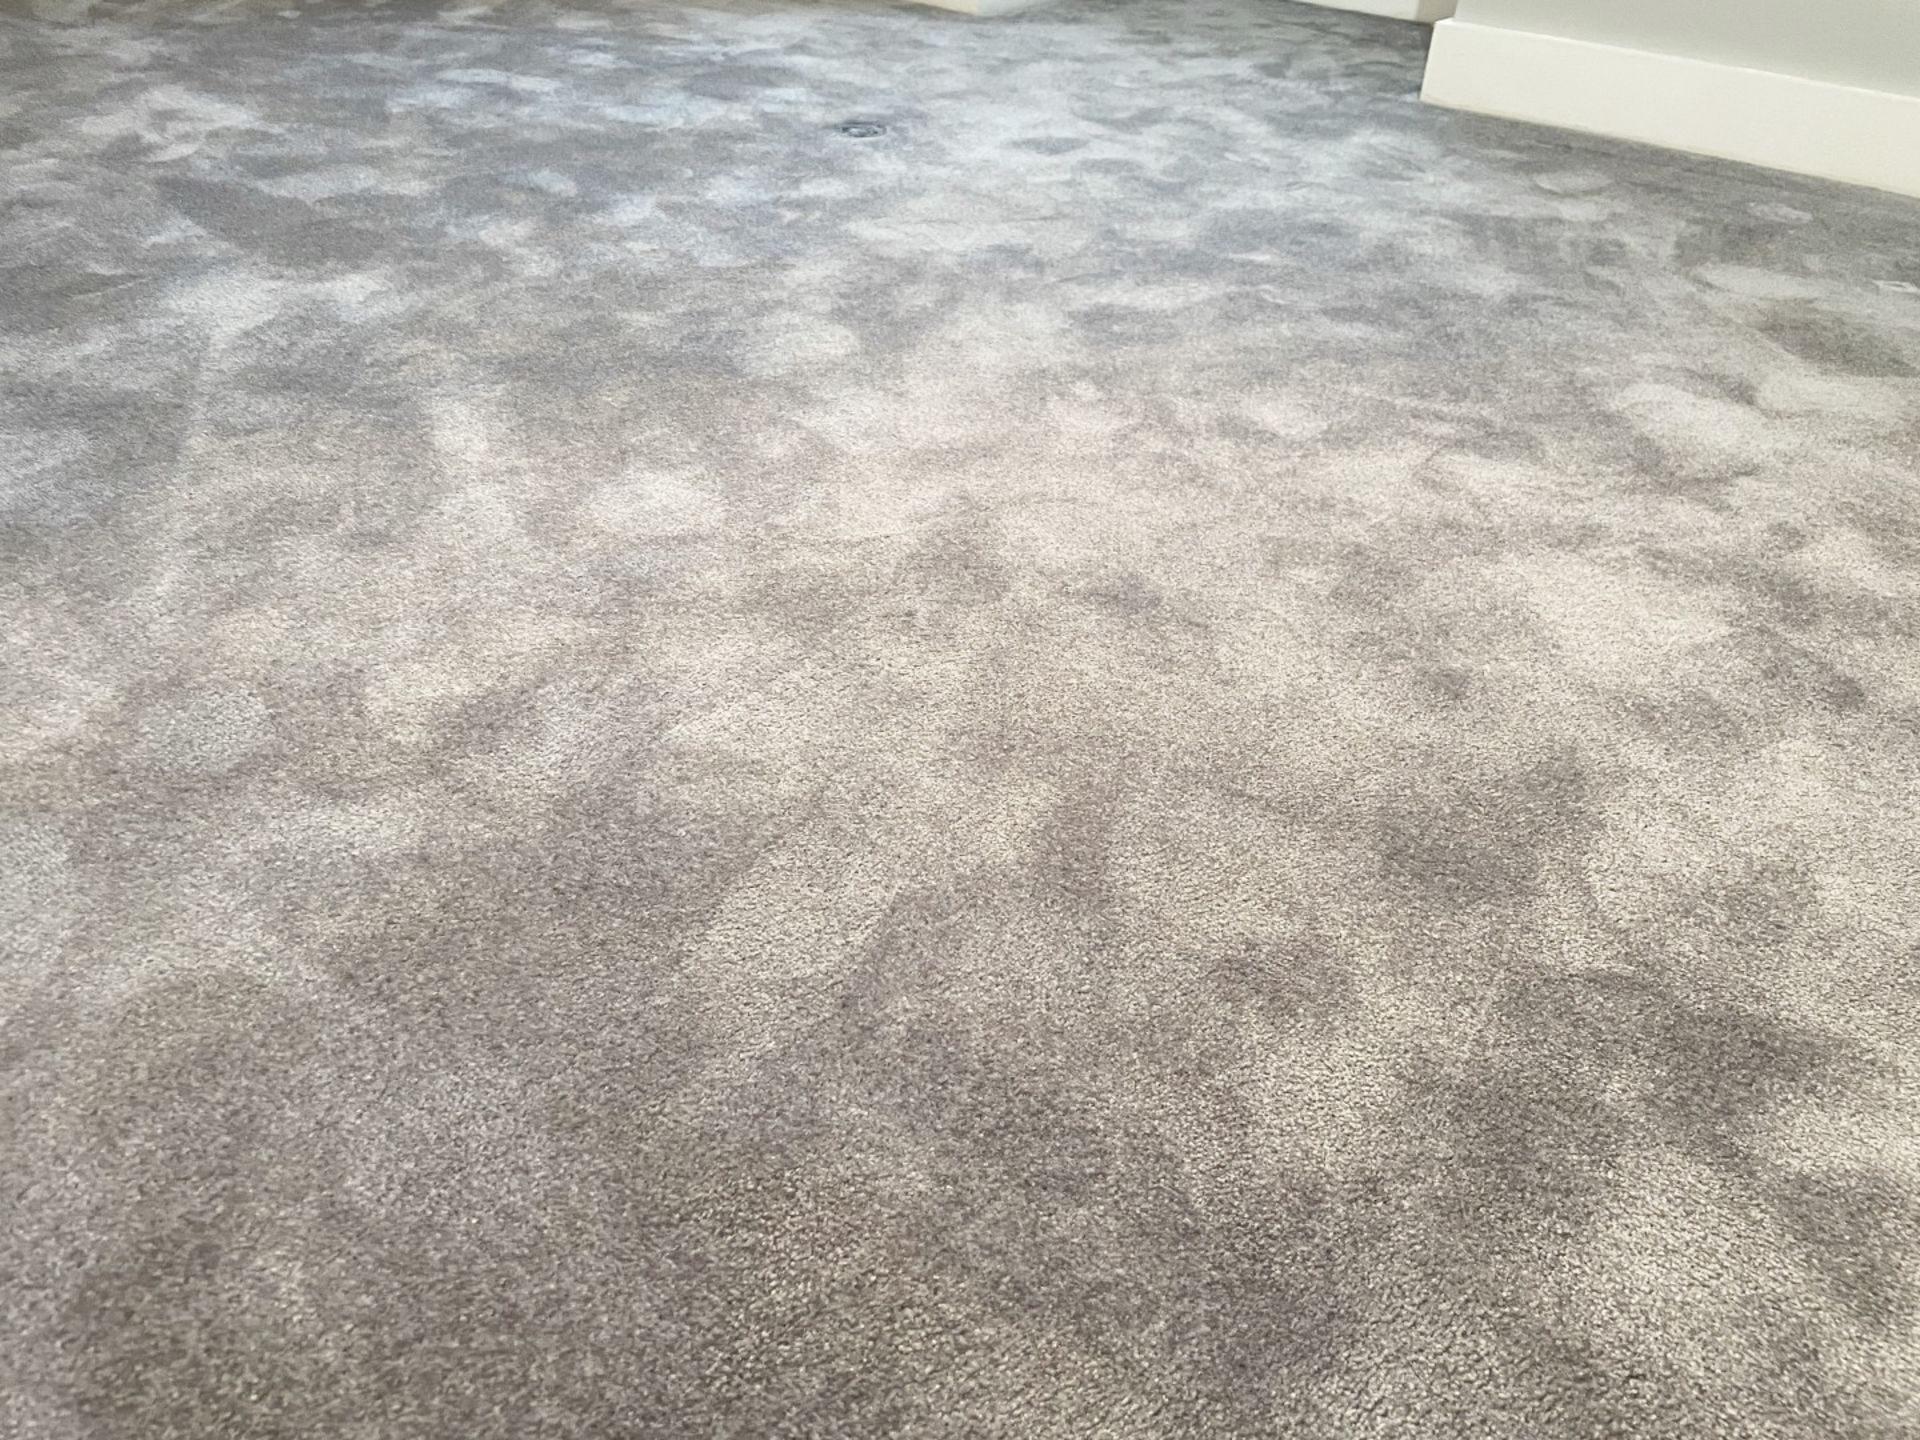 1 x Premium Bedroom Carpet In Grey (4.6 x 3.2m) - Ref: FRNT-BD/2ndFLR - CL742 - Image 4 of 6